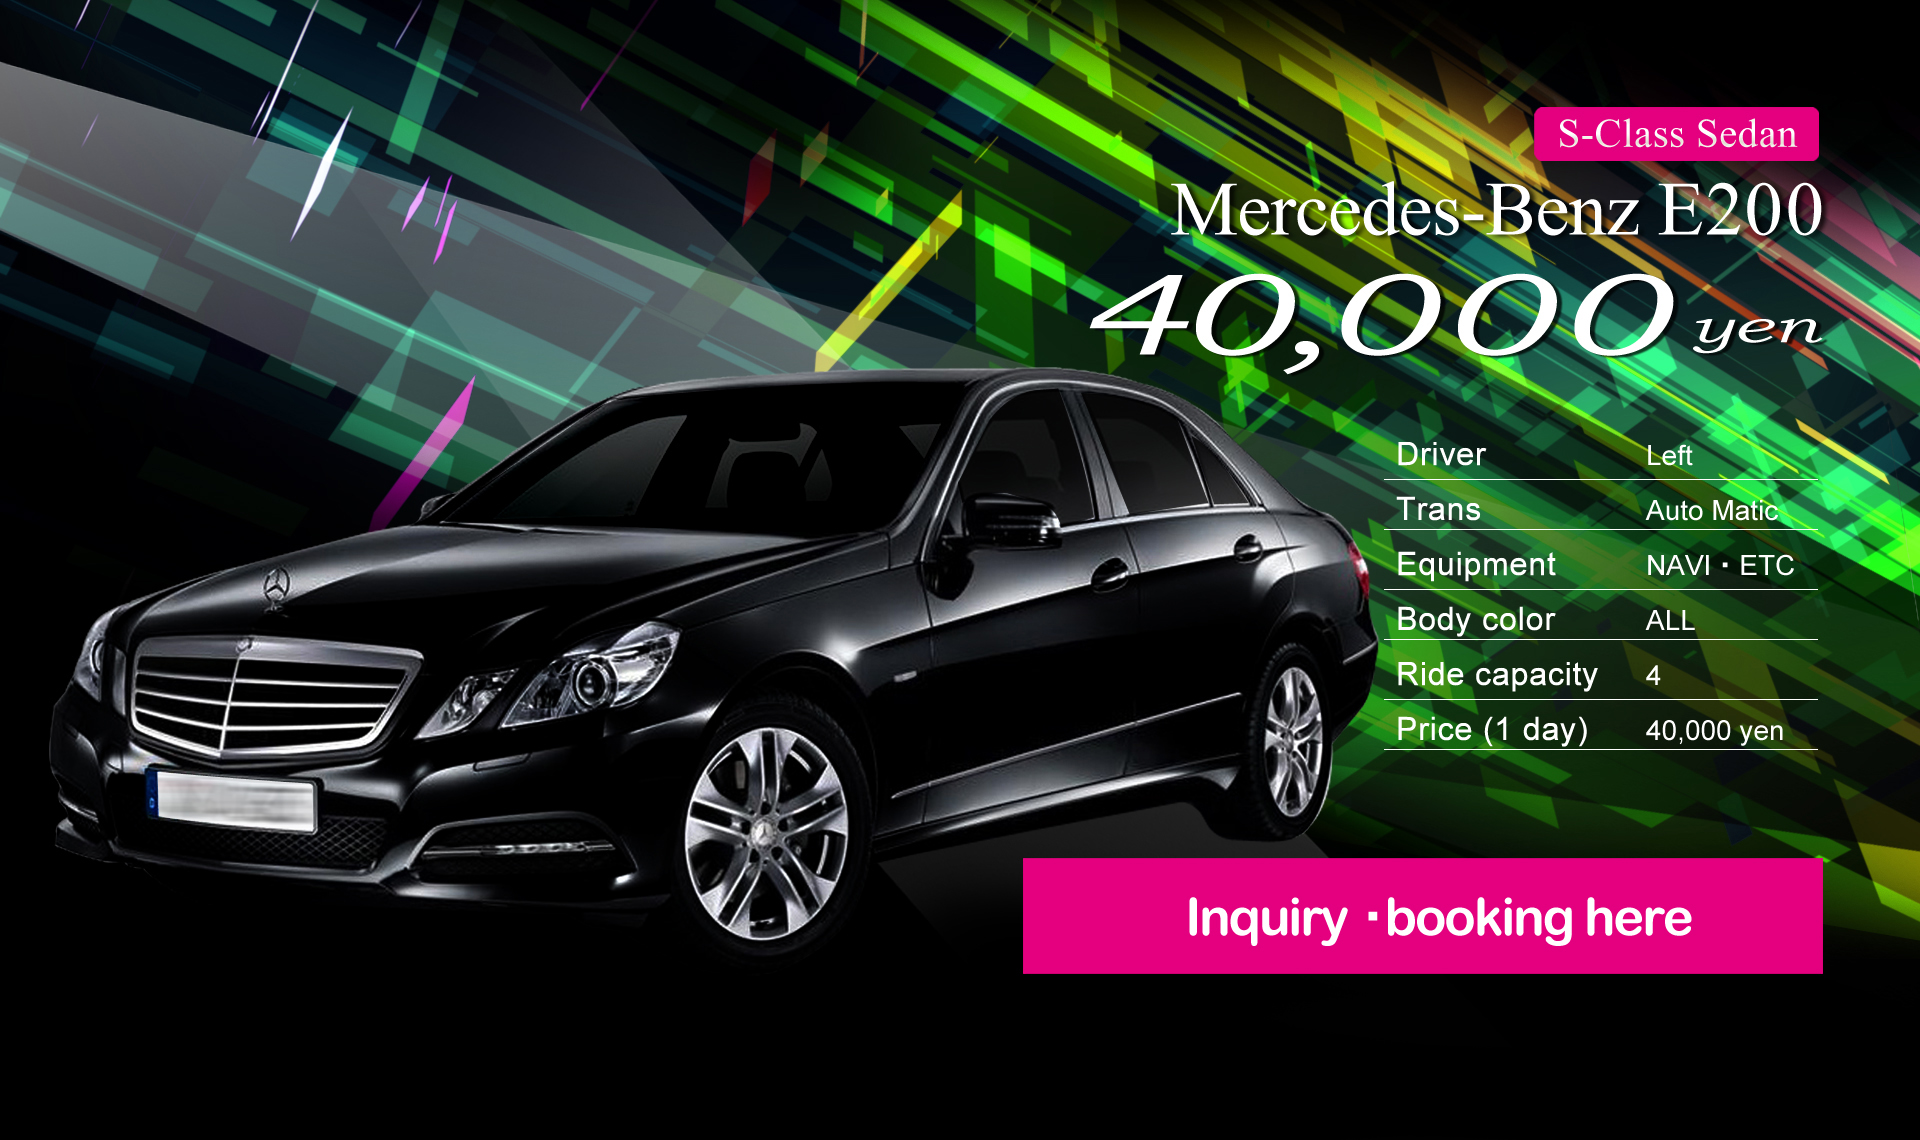 Mercedes-Benz E200 Inquiry　booking here